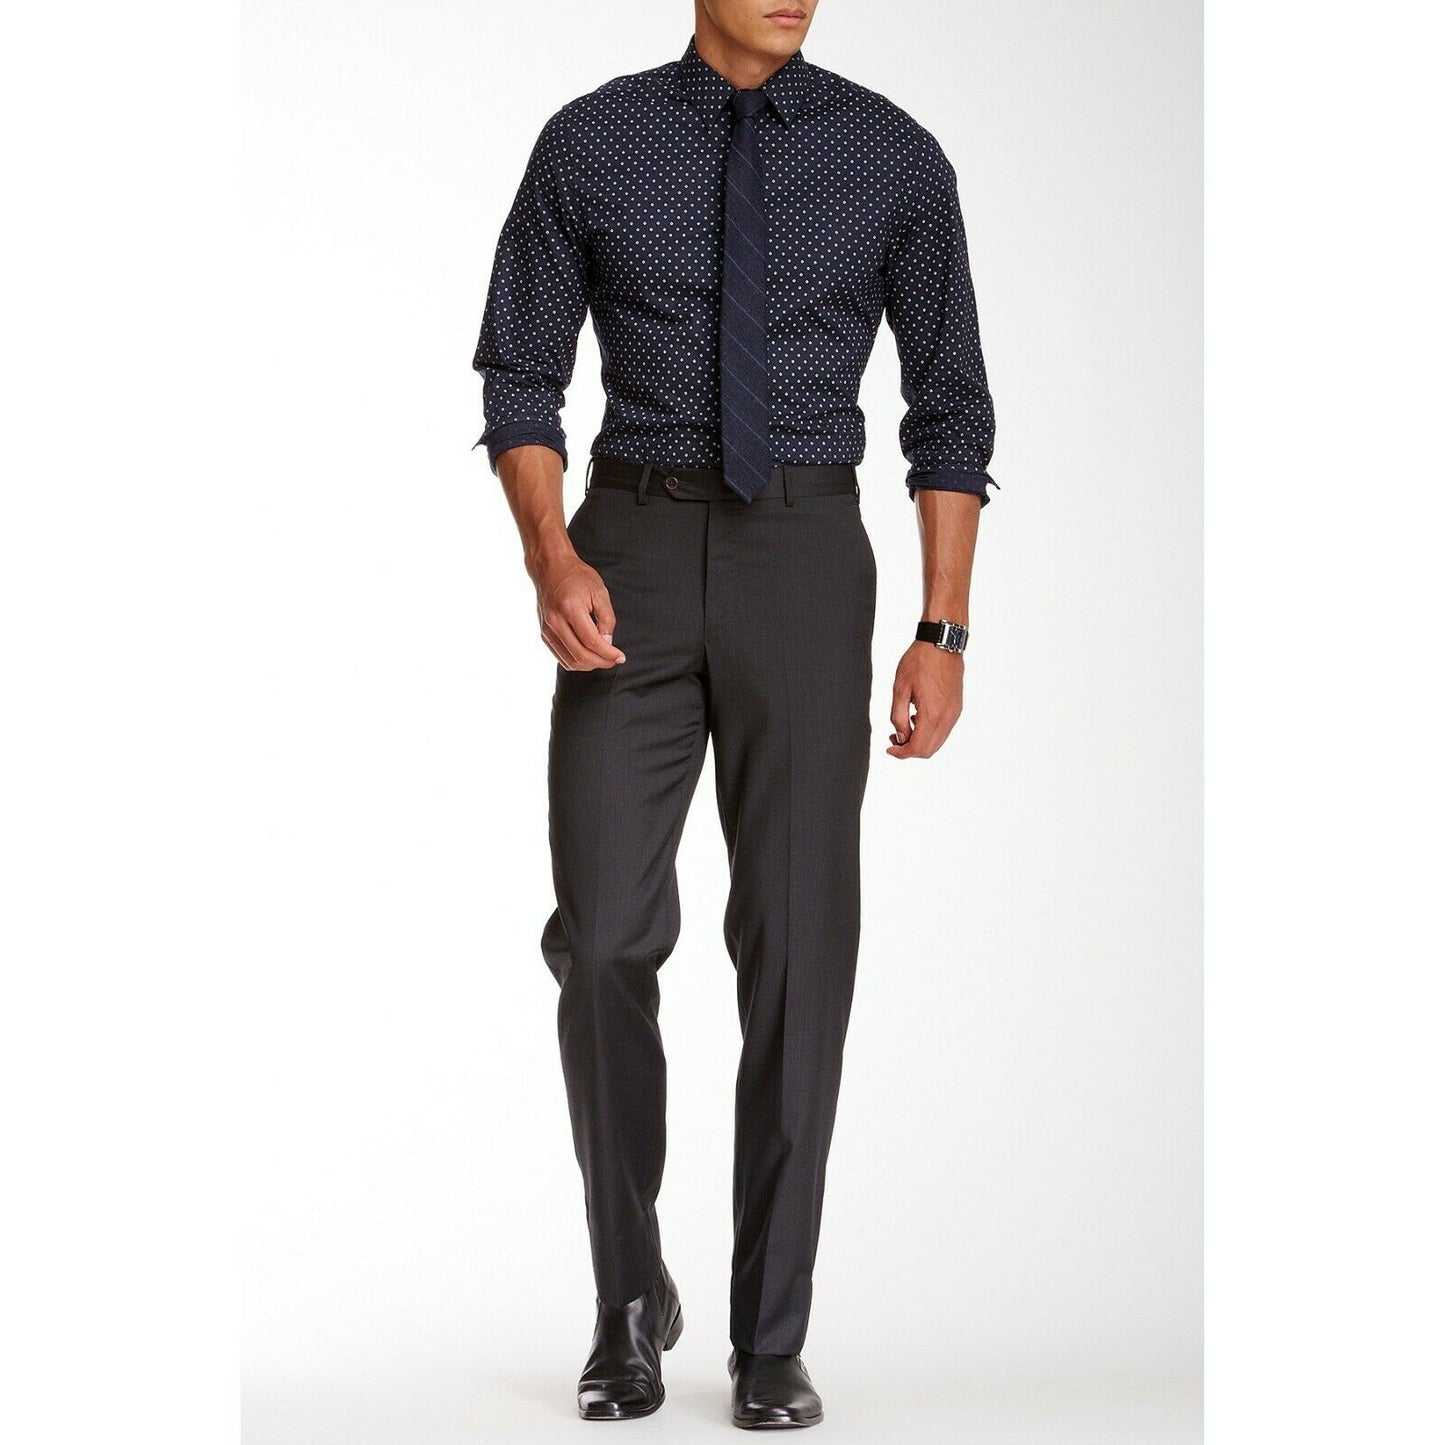 Ike Behar Mens Charcoal Grey Wool Flat Front Dress Suit Slacks Pants 42 NWT